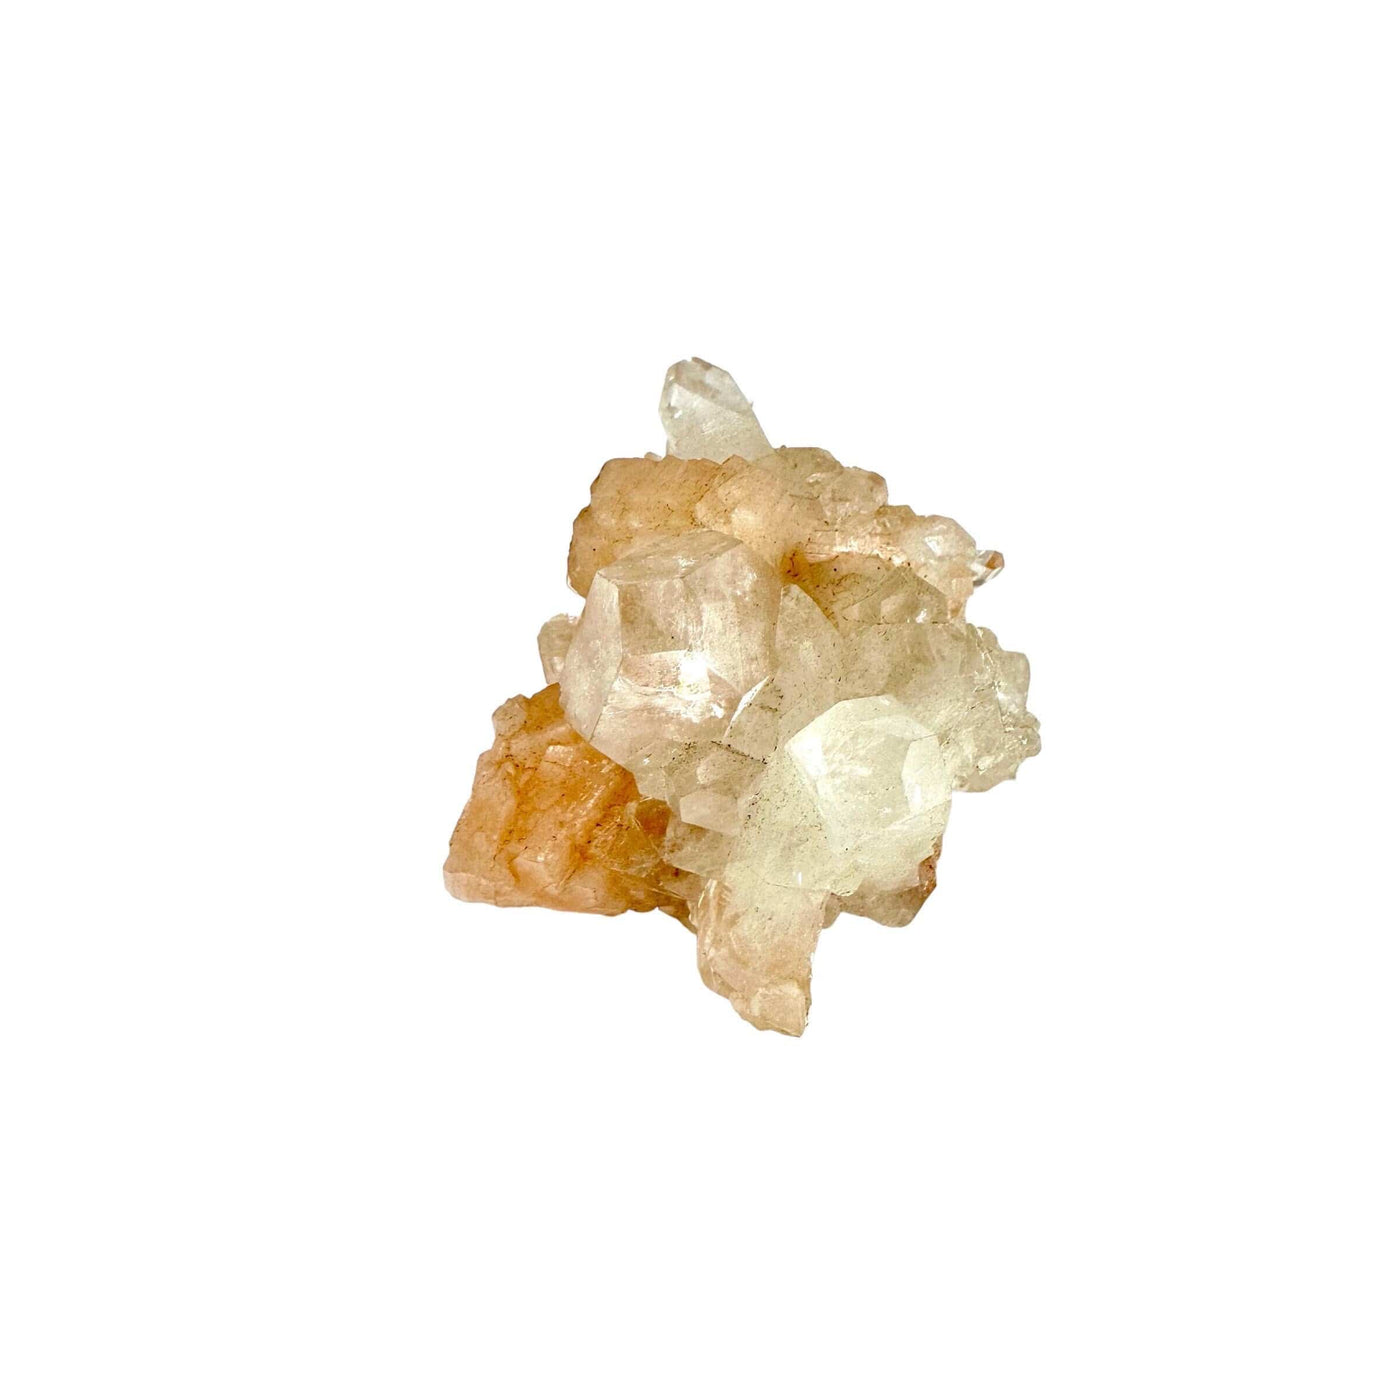 Peach Stilbite Crystal with Apophyllite side view